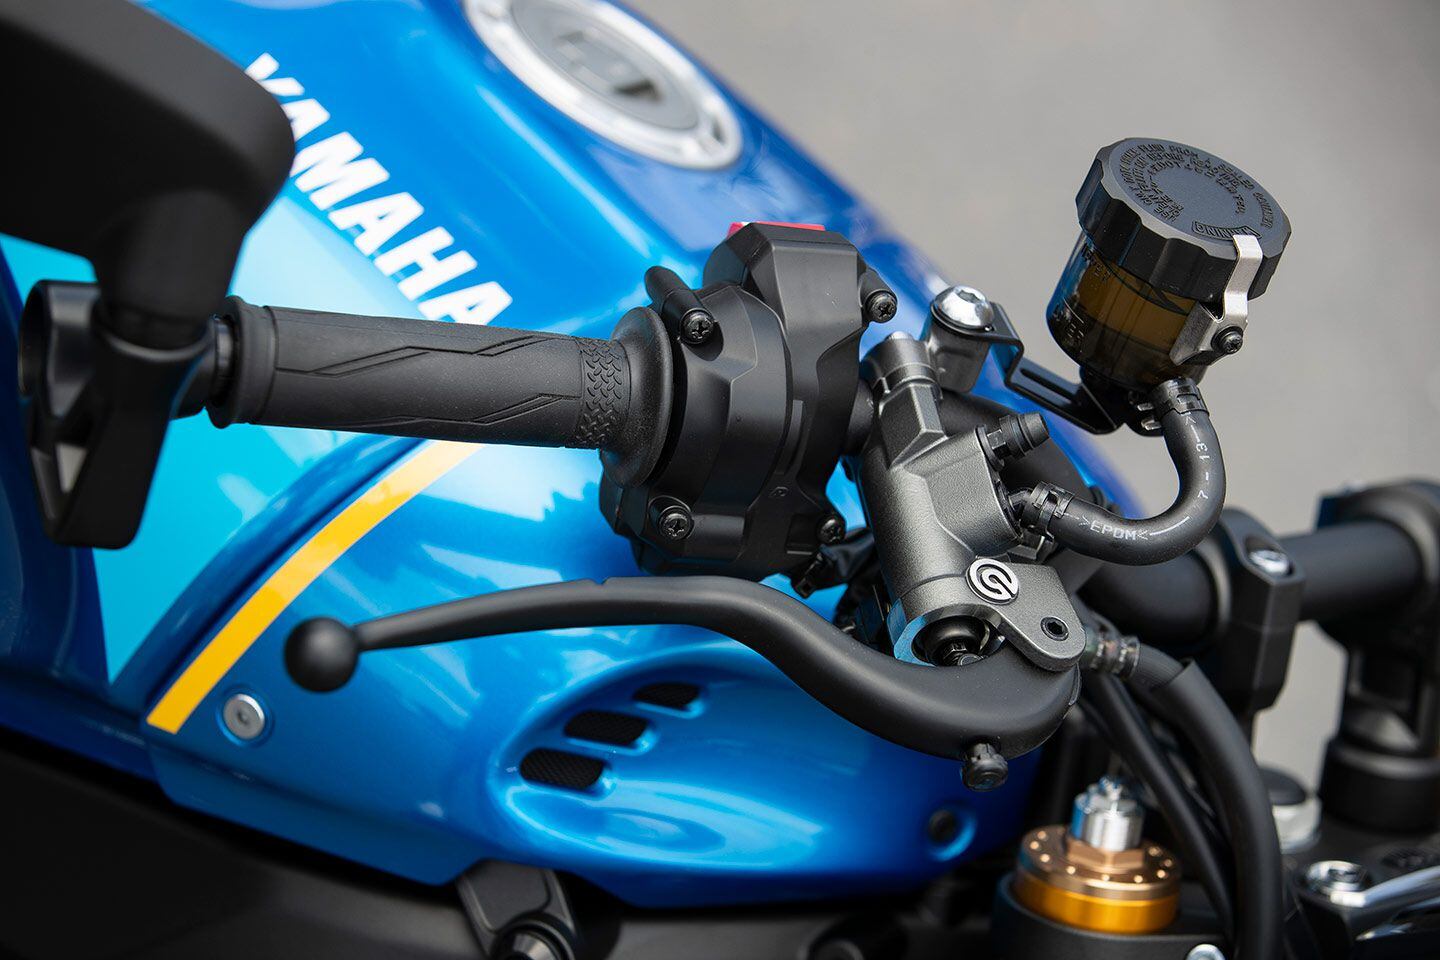 Radially mounted Brembo master cylinder improves braking performance.